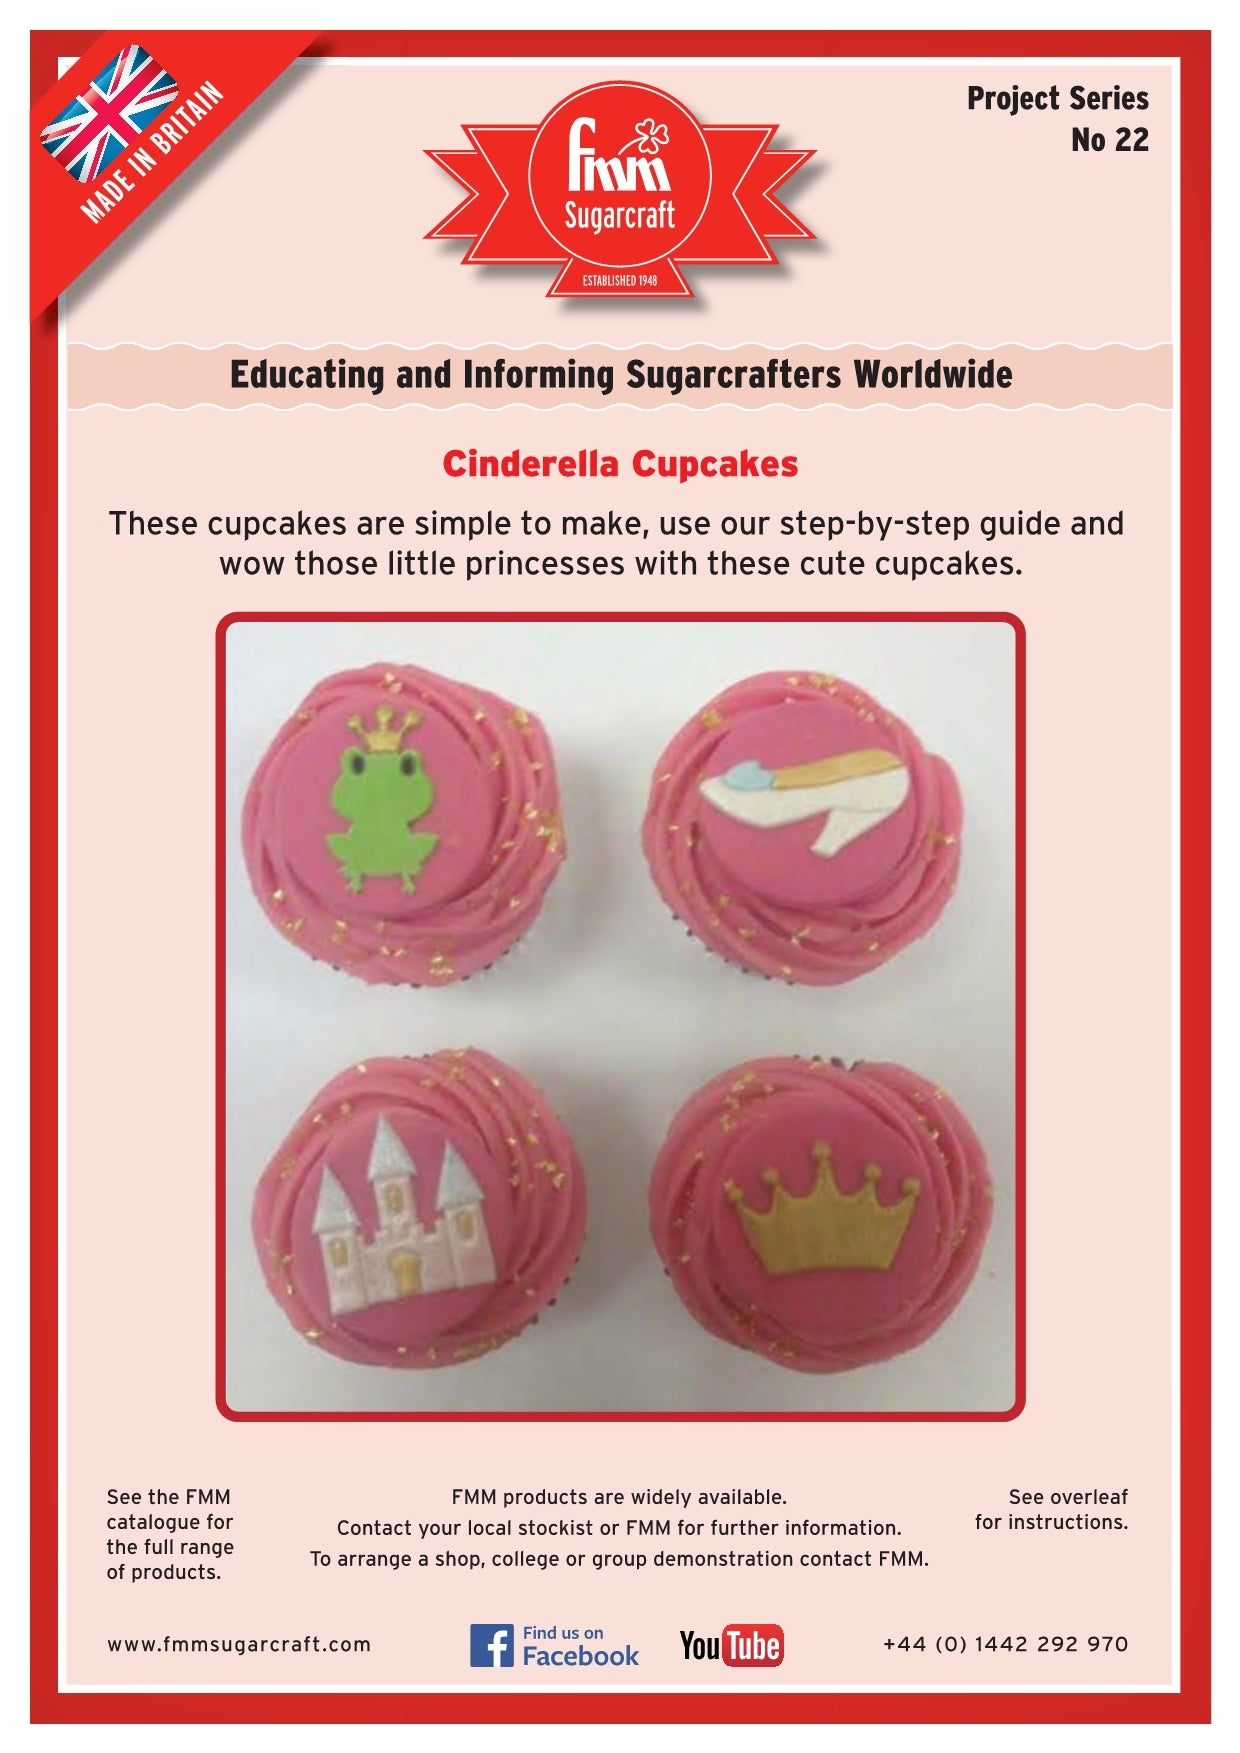 Cinderella Cupcake project sheet